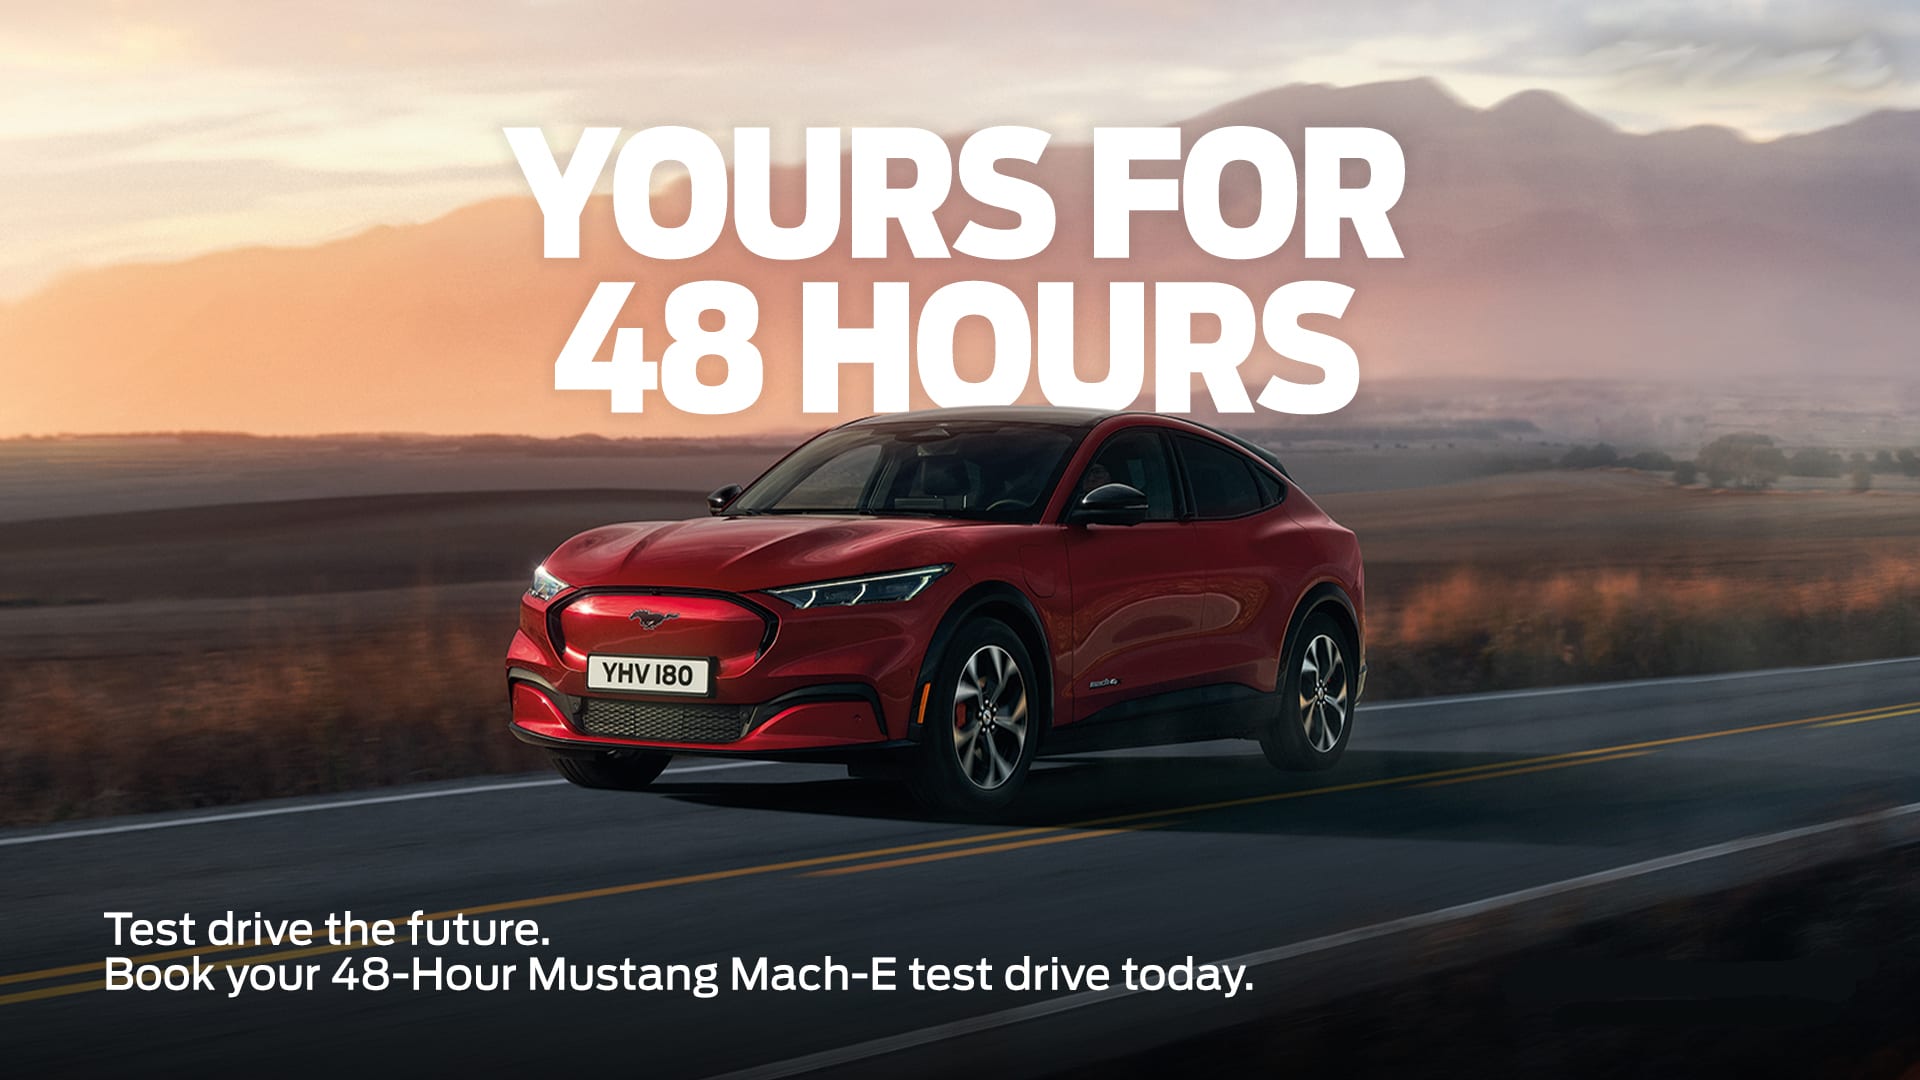 Mustang Mach-E 48 Hour Test Drive